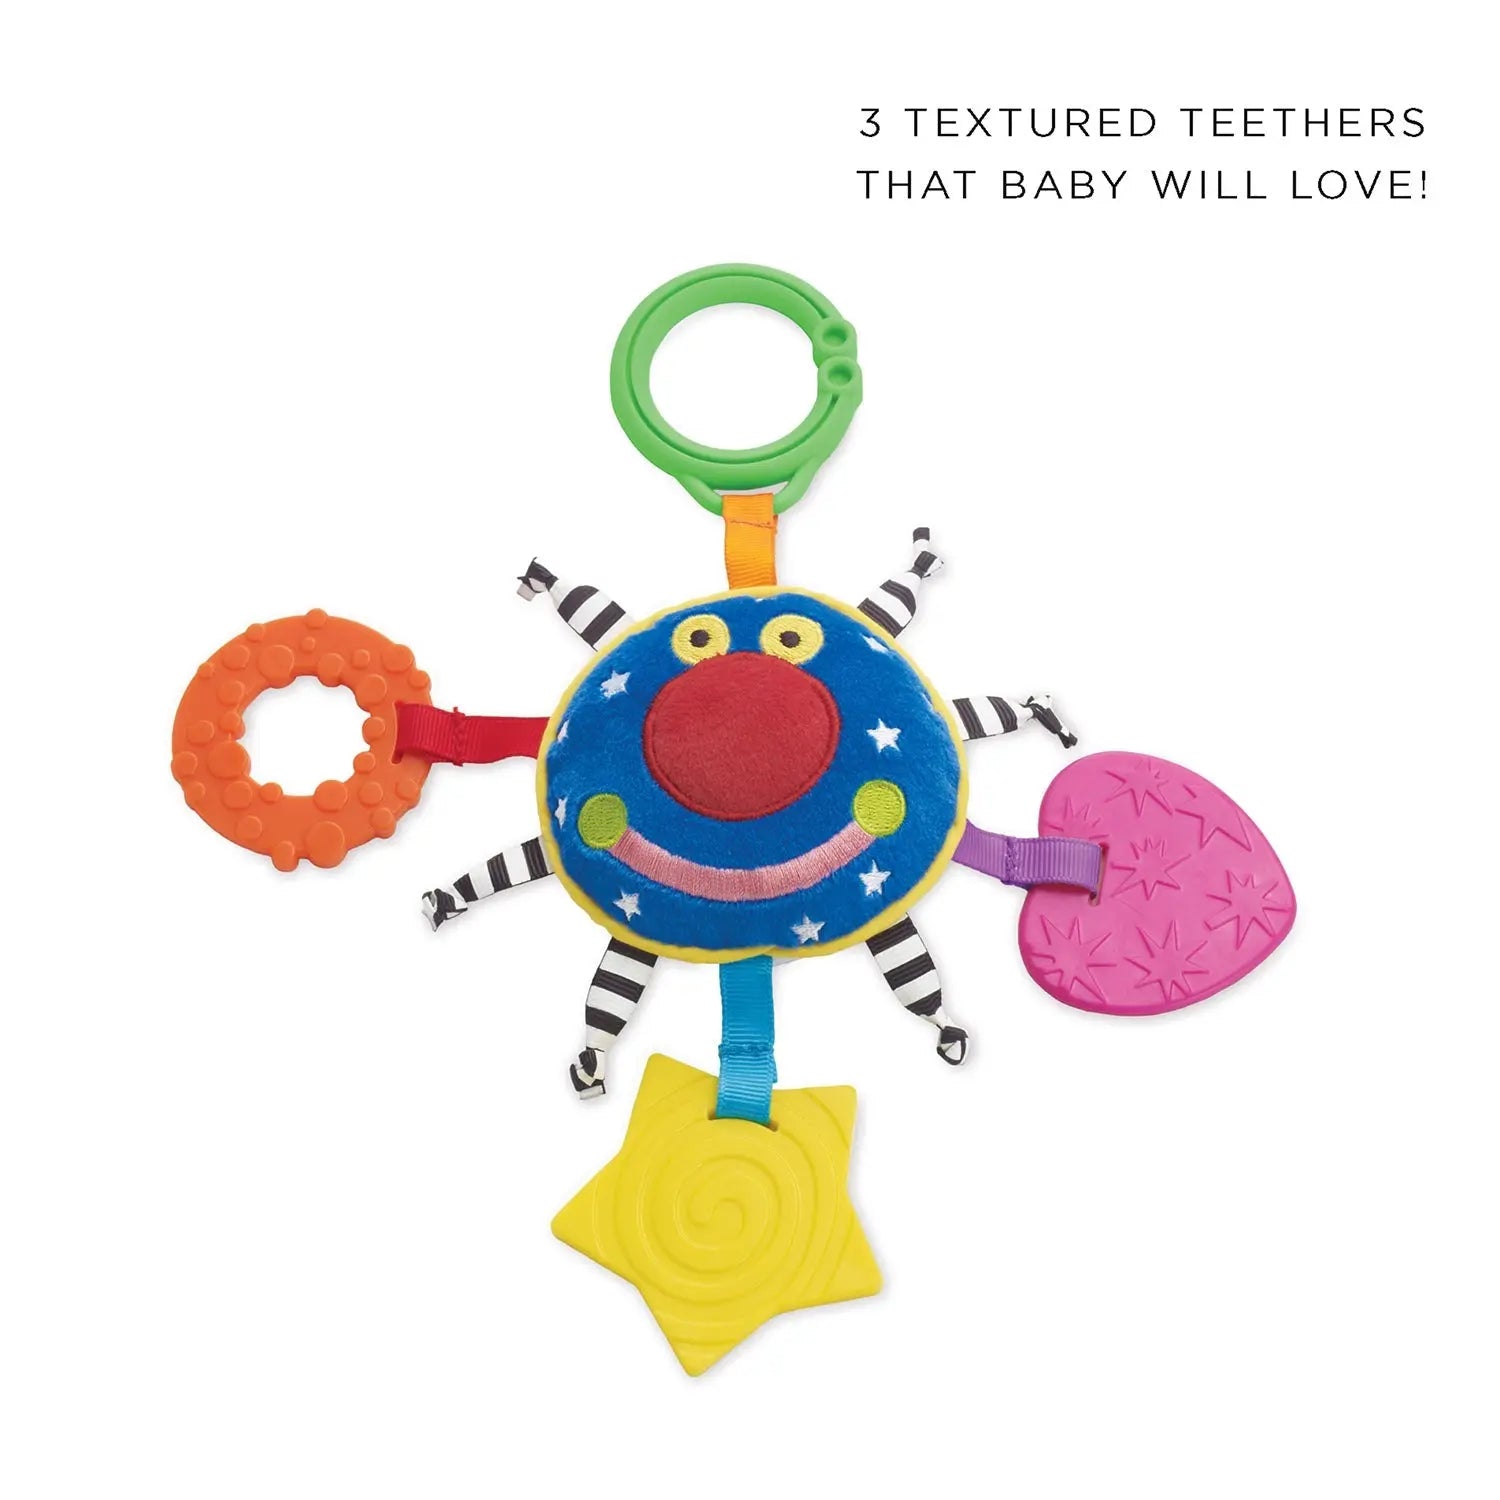 Manhattan Toy Whoozit Orbit Teether Teethers